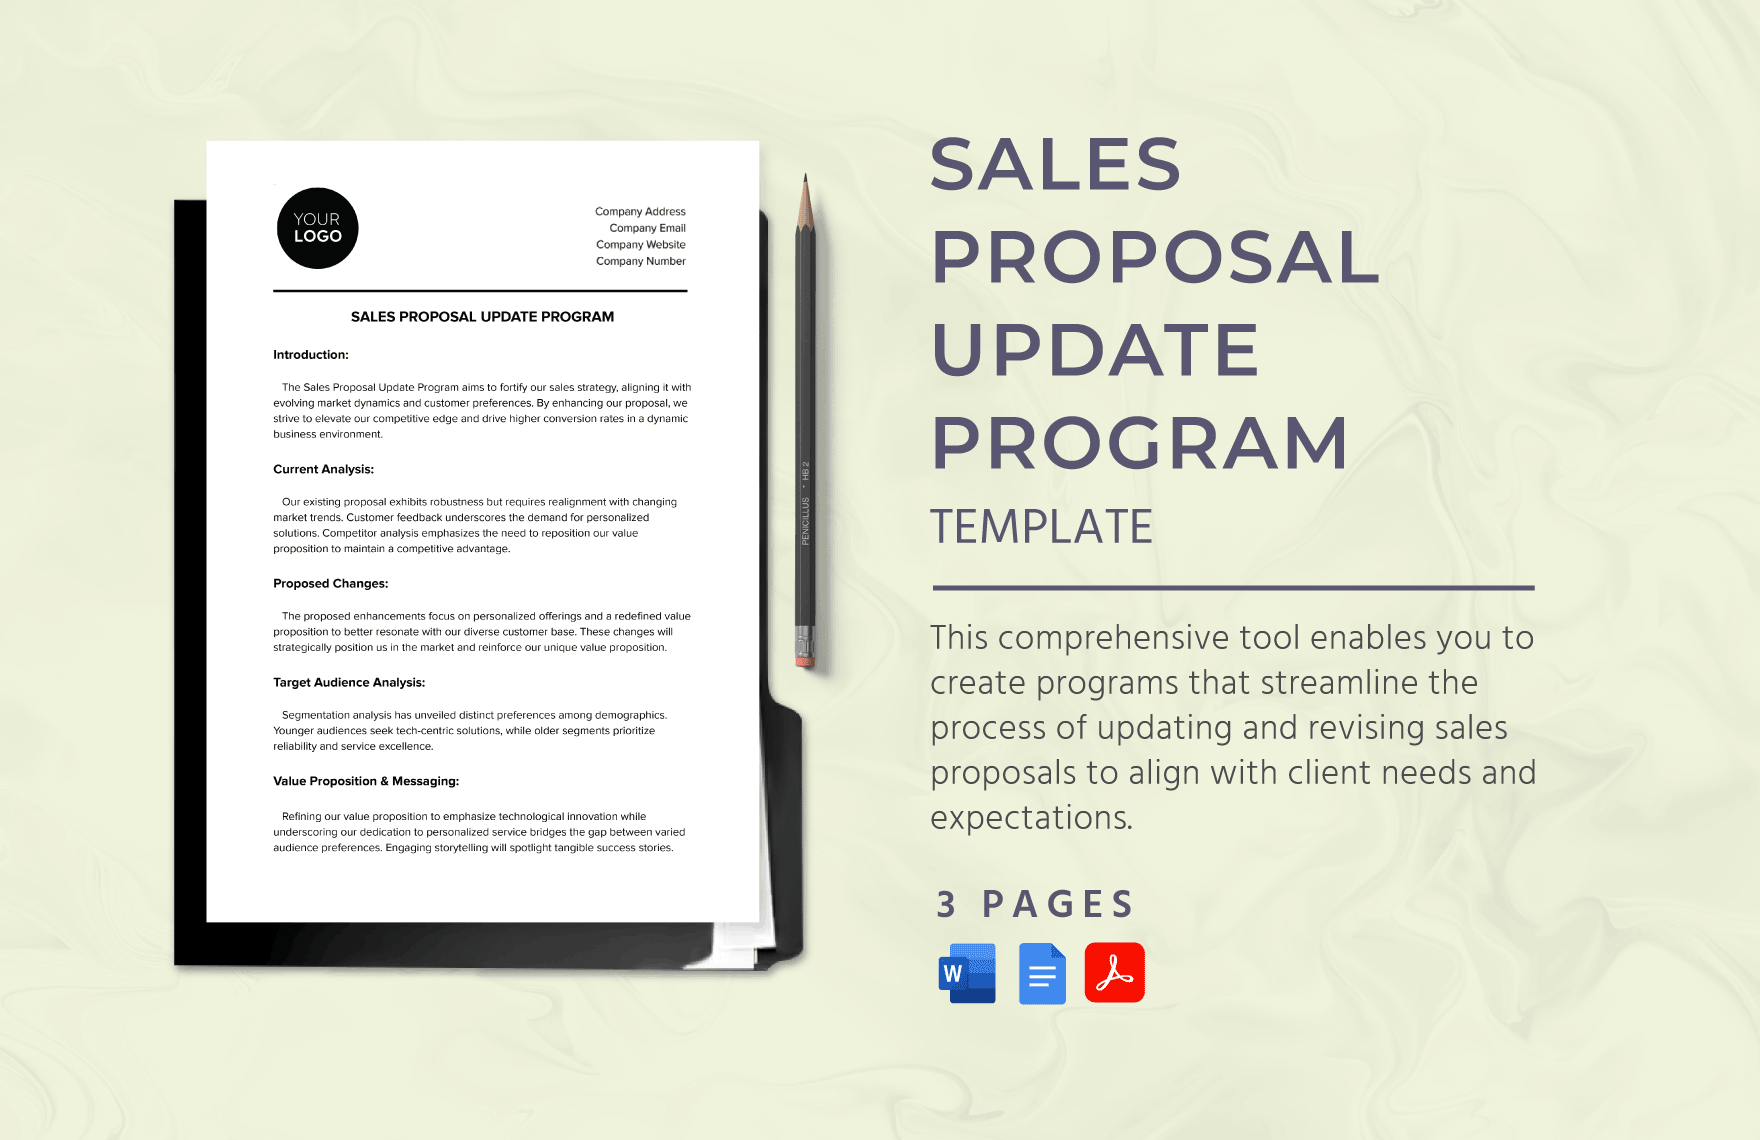 Sales Proposal Update Program Template